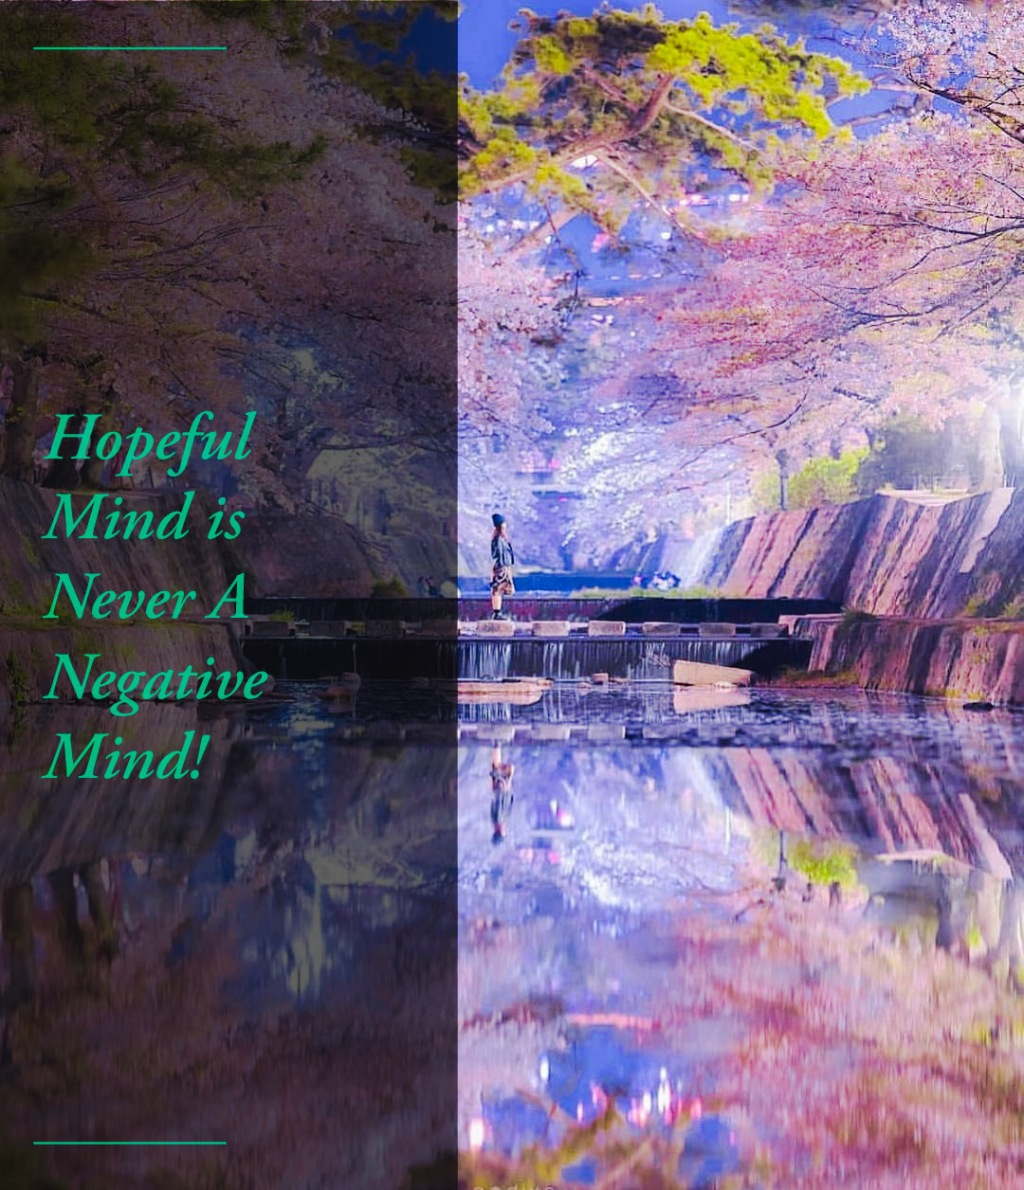 A hopeful Mind Is Never A Negative Mind!